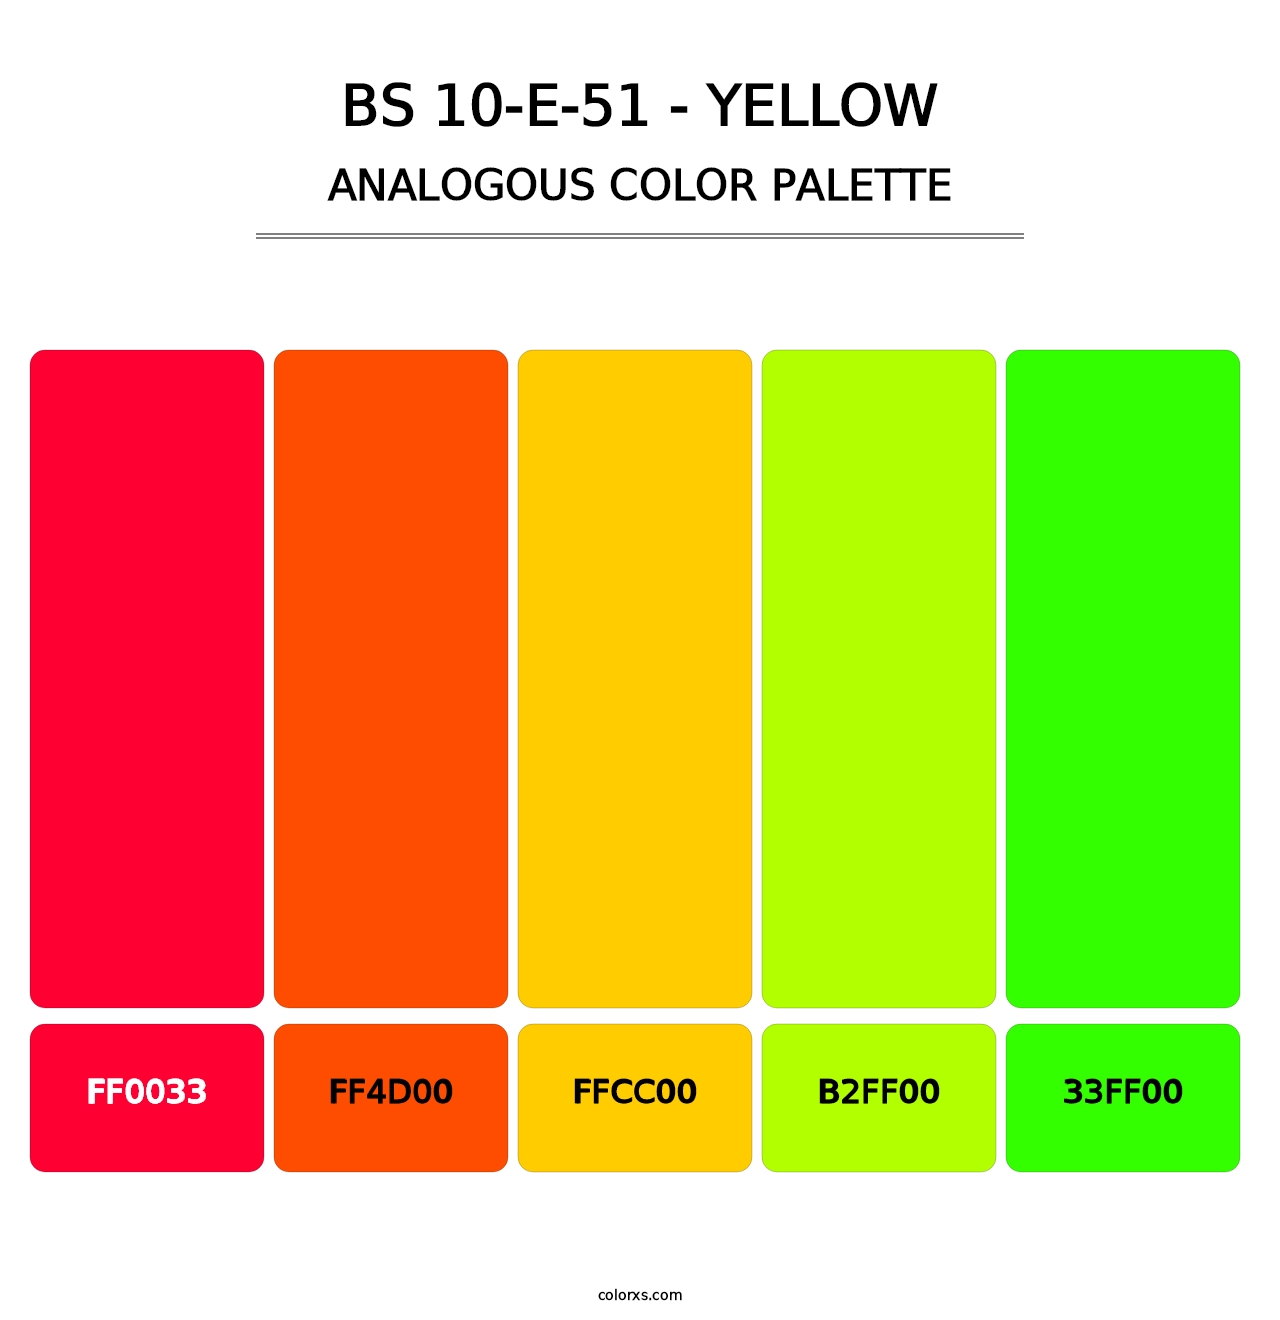 BS 10-E-51 - Yellow - Analogous Color Palette